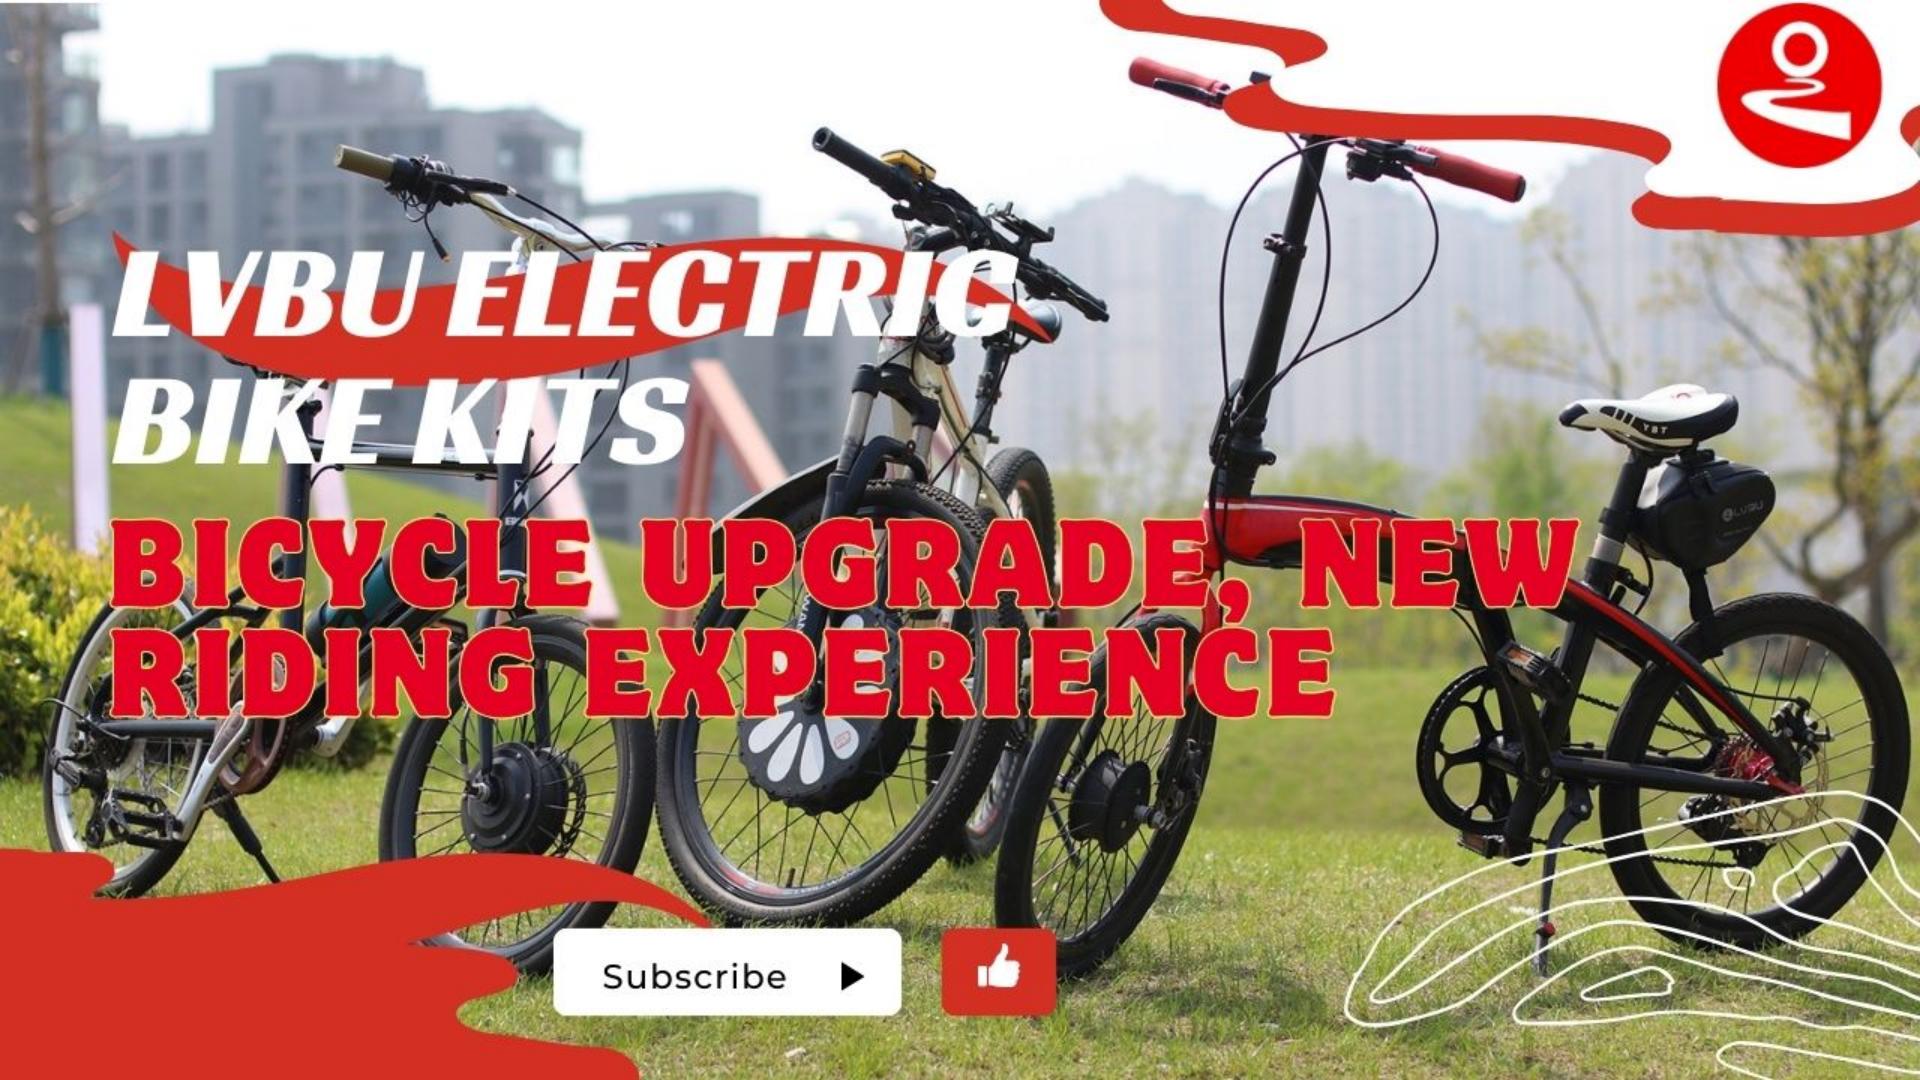 Lvbu electric bike kit: Bicycle Upgrade, New Riding Experience